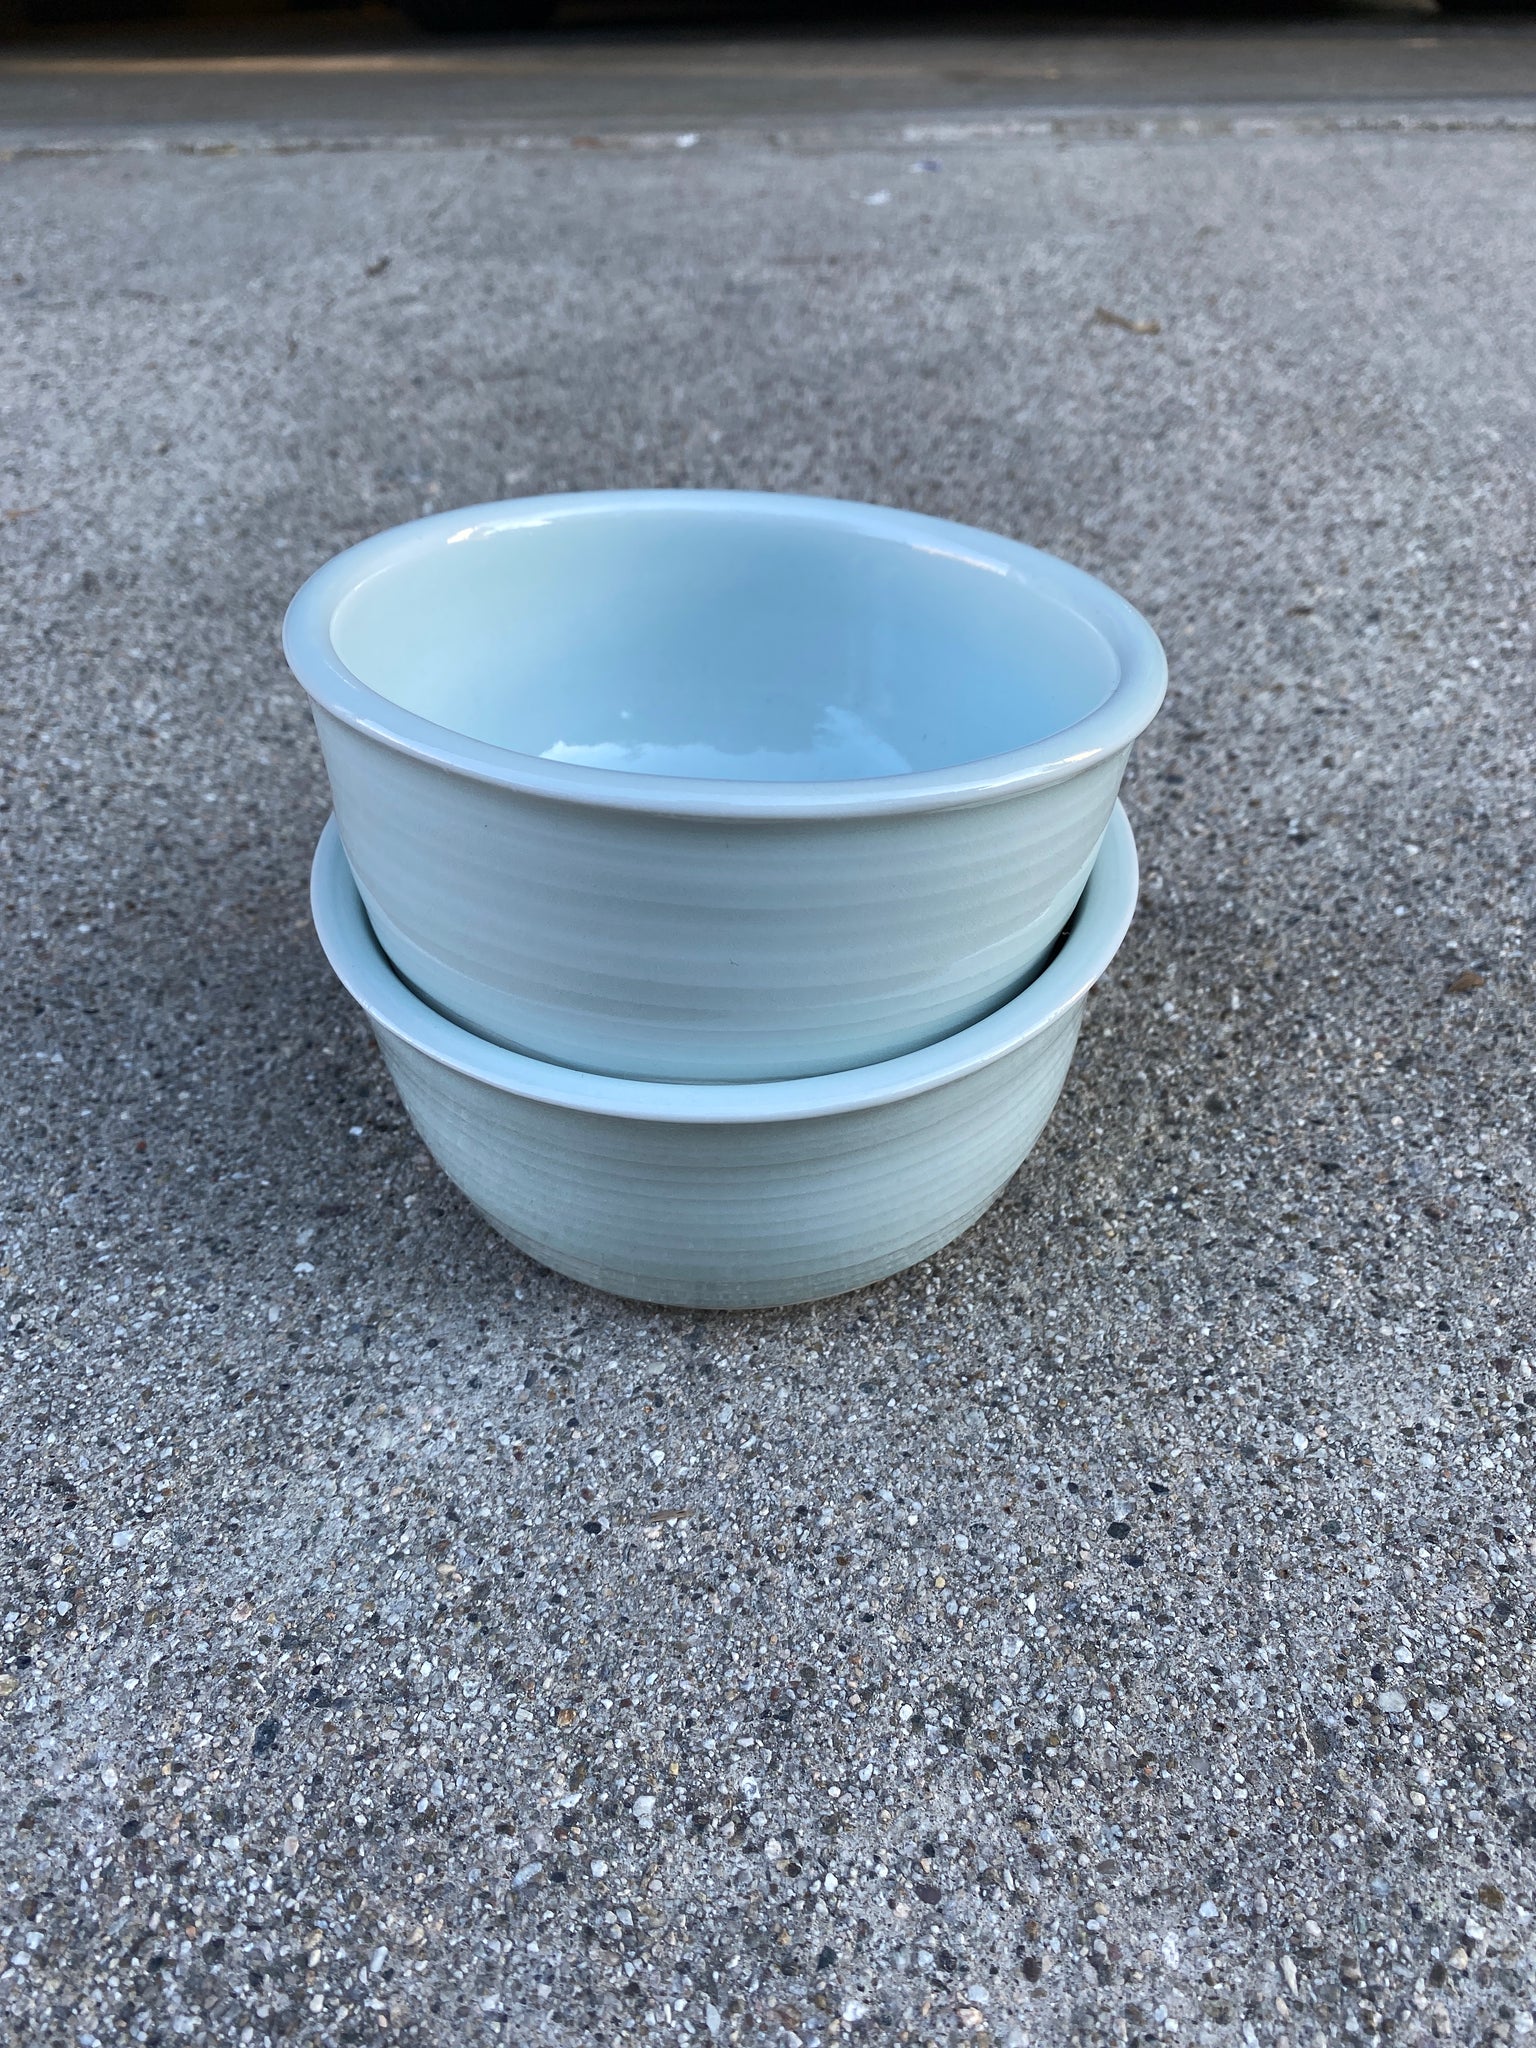 all purpose bowls 007/set of 2